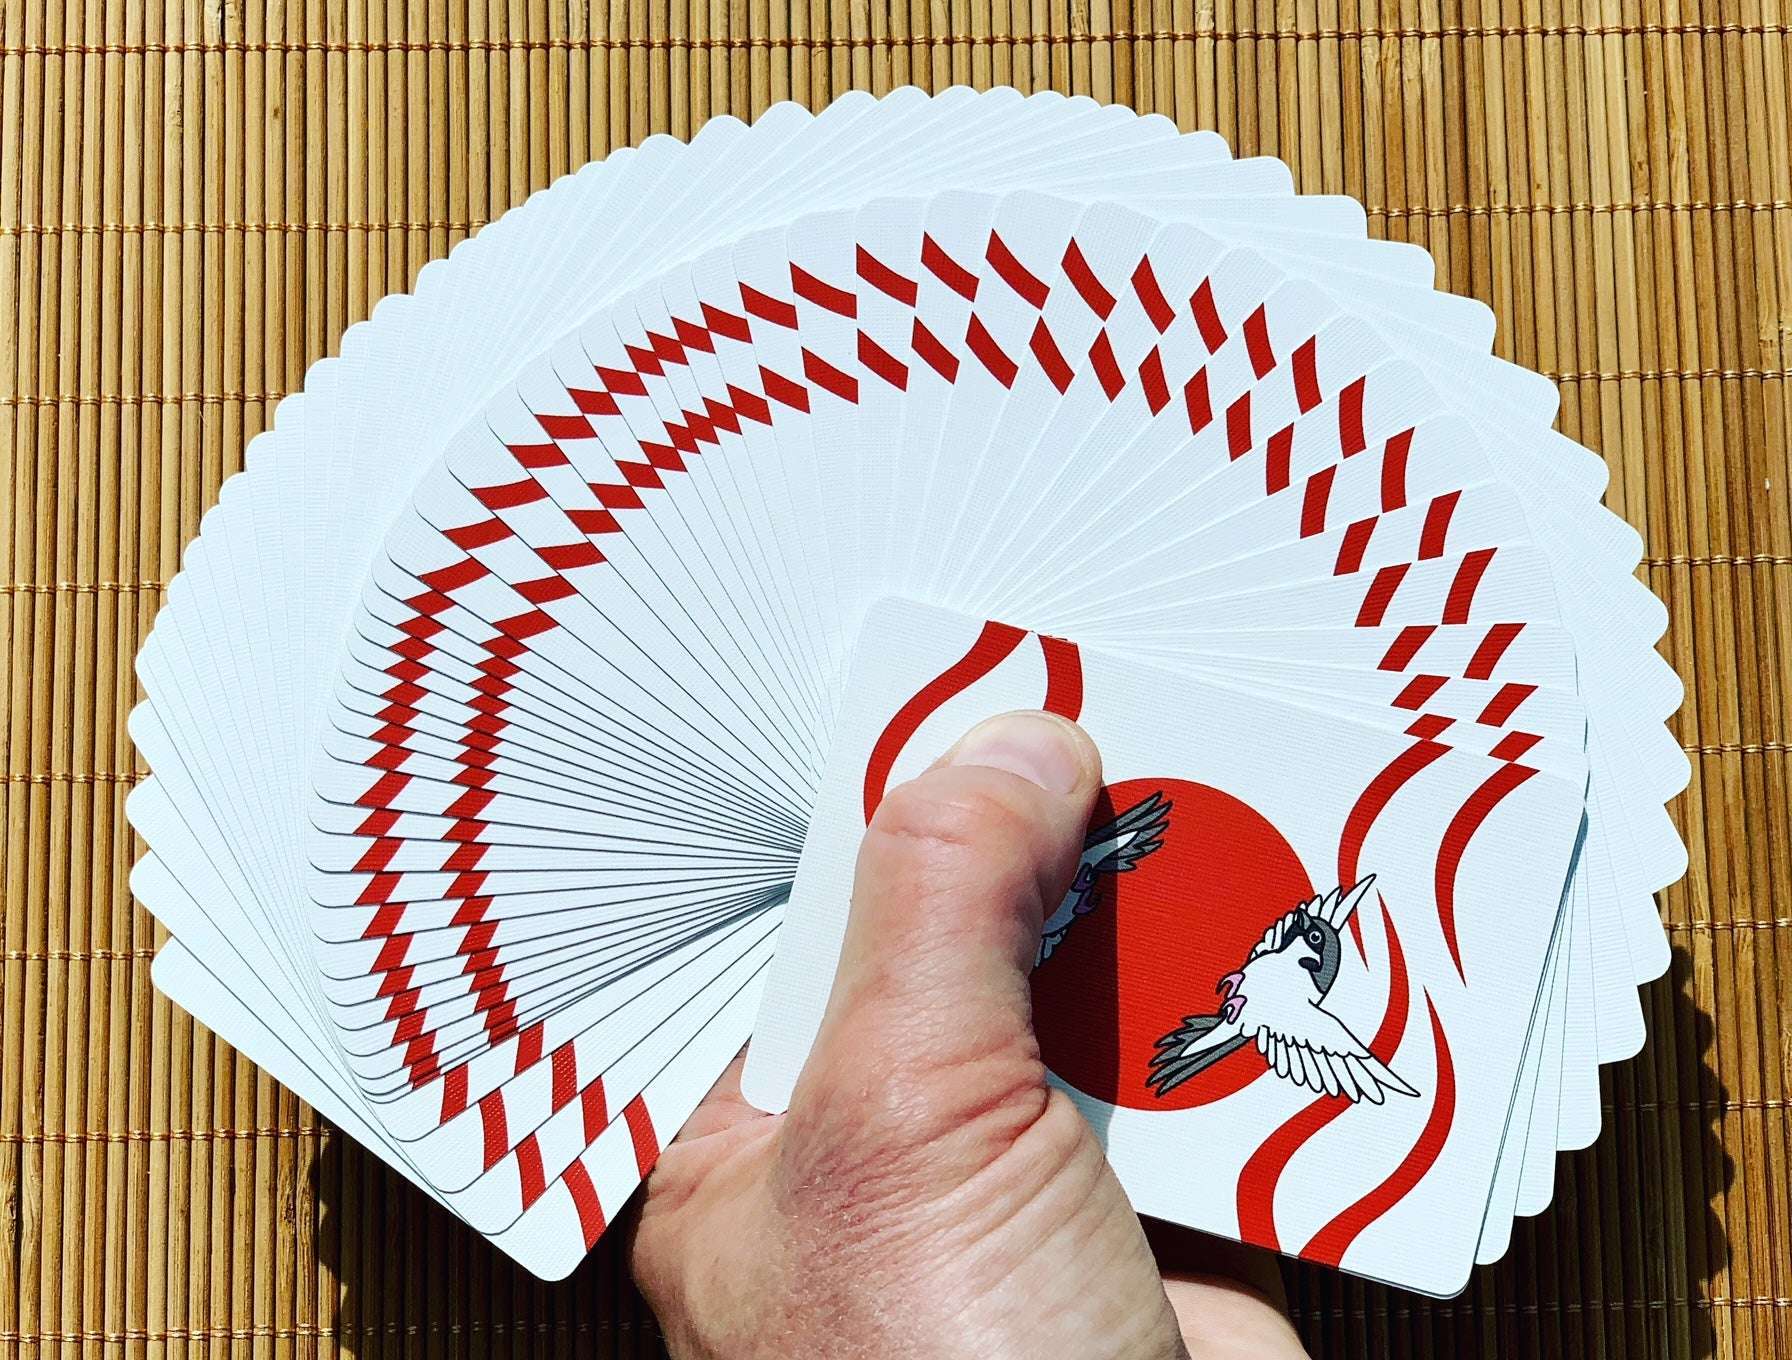 PlayingCardDecks.com-Sparrow Hanafuda Gilded Bicycle Playing Cards